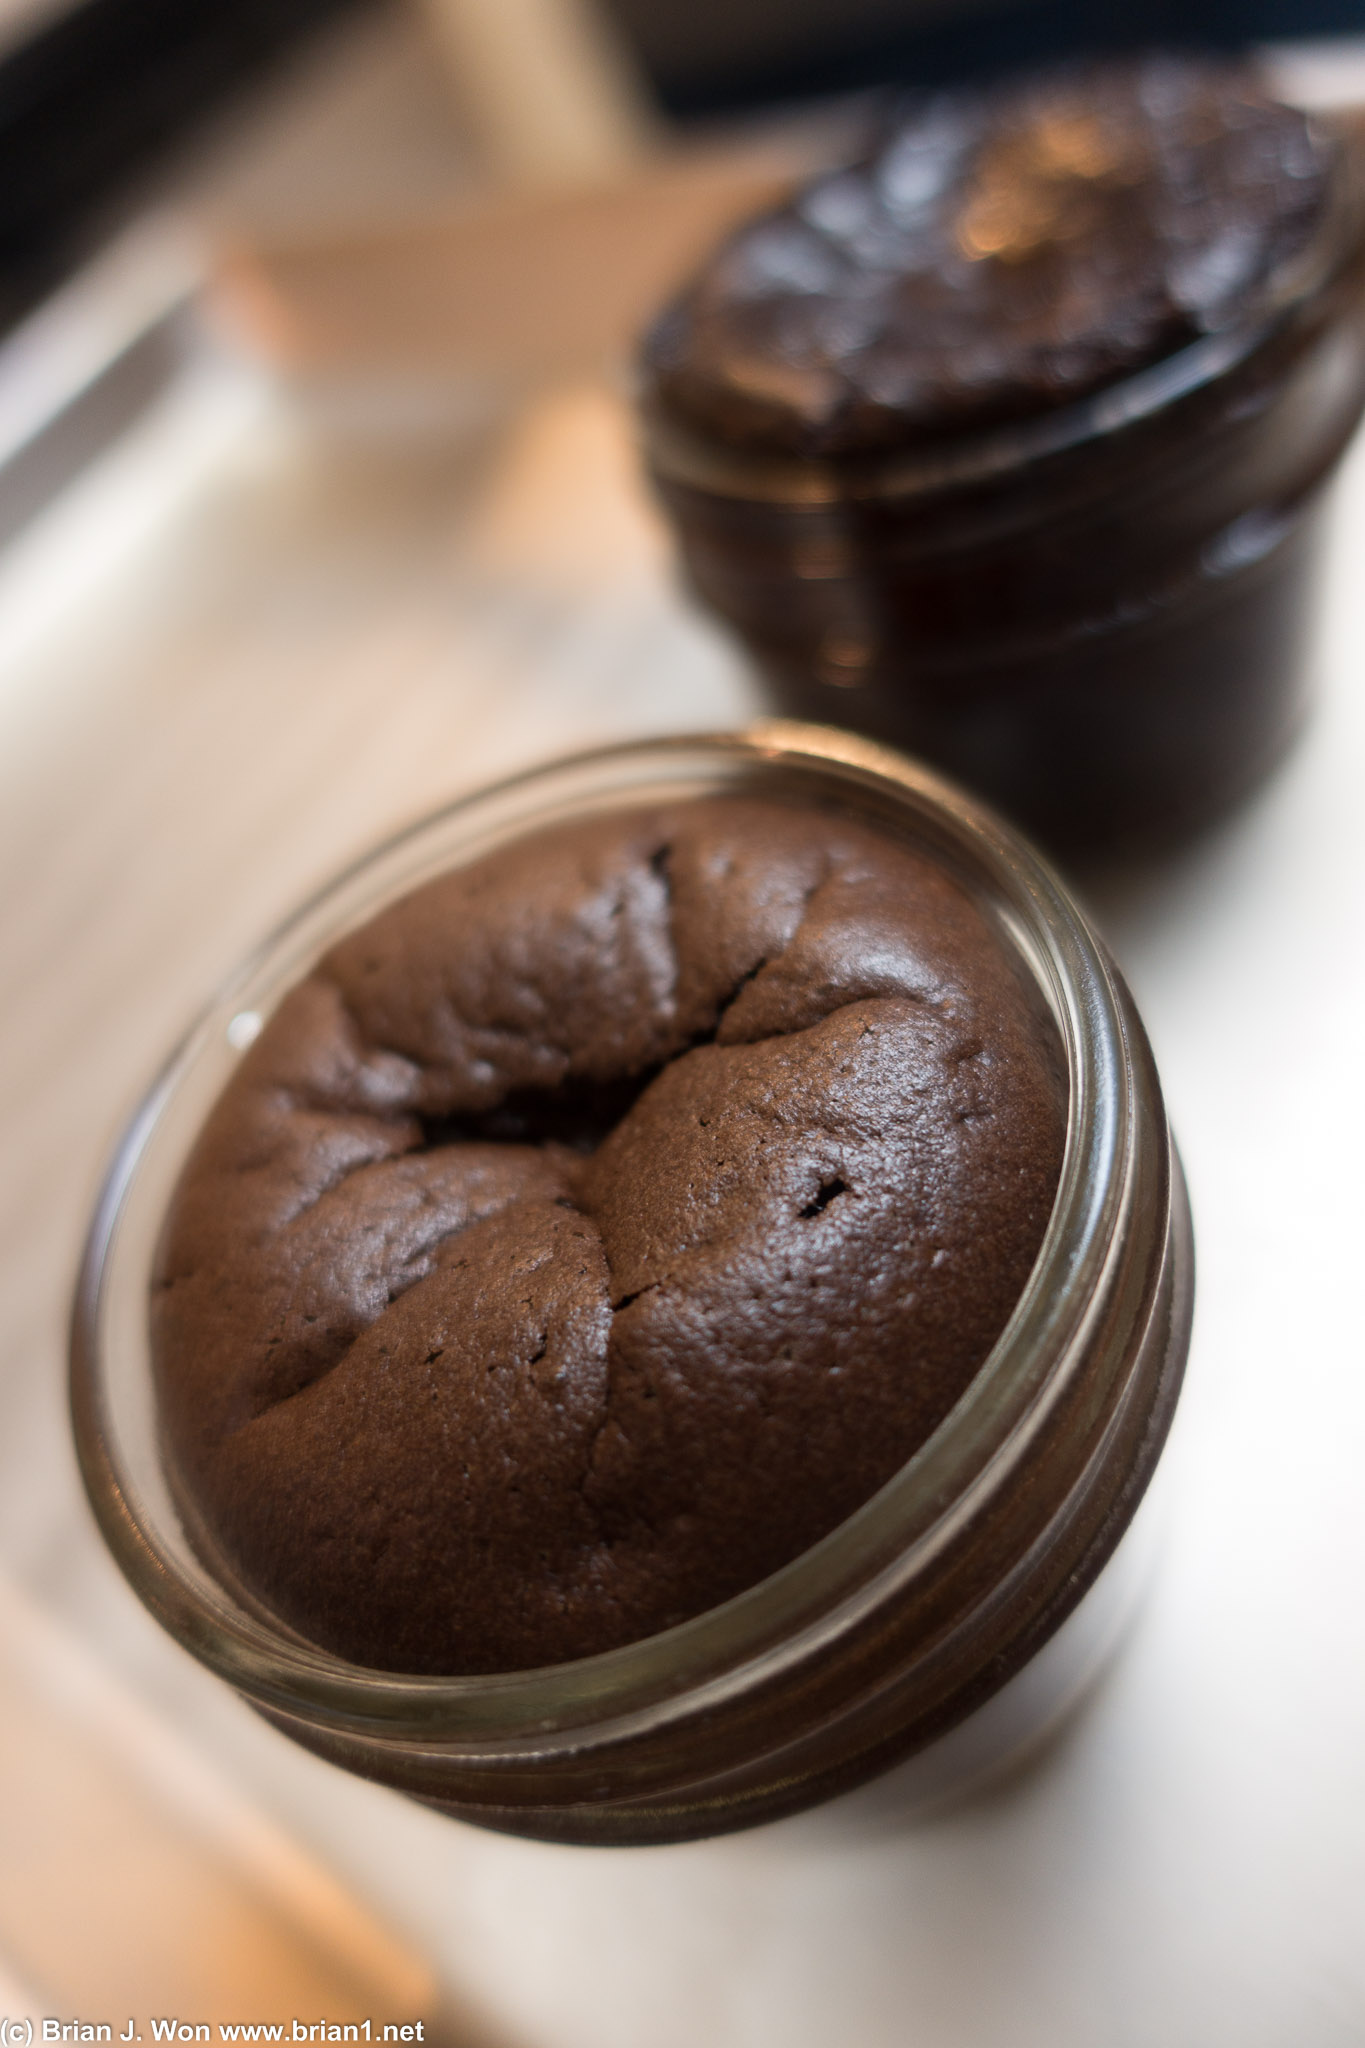 Molten chocolate cake for dessert.